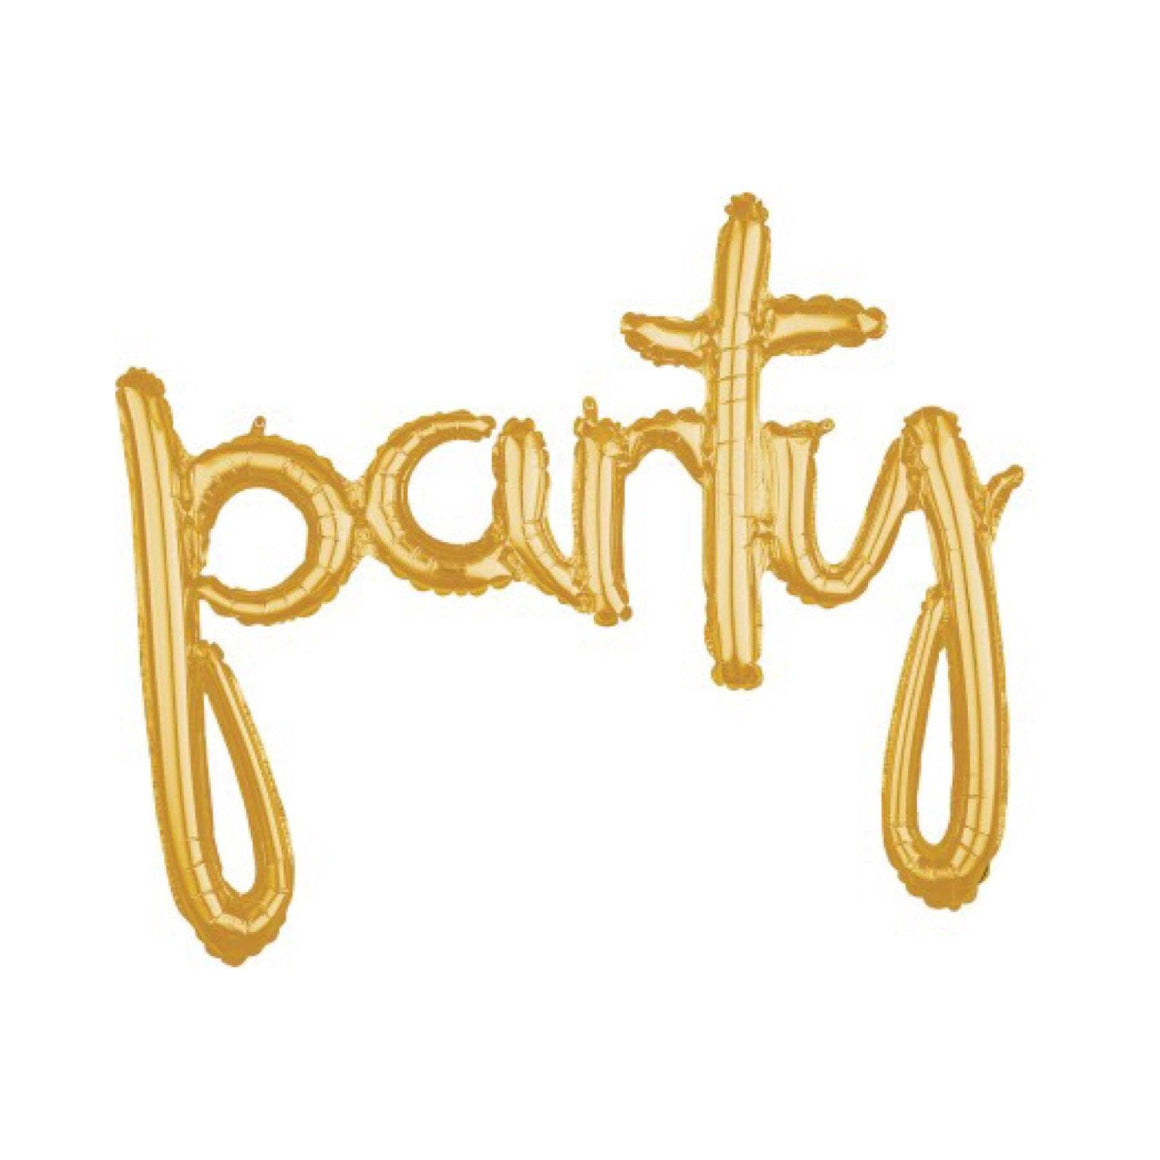 BALLOONS - SCRIPT PARTY GOLD, Balloons, Anagram - Bon + Co. Party Studio